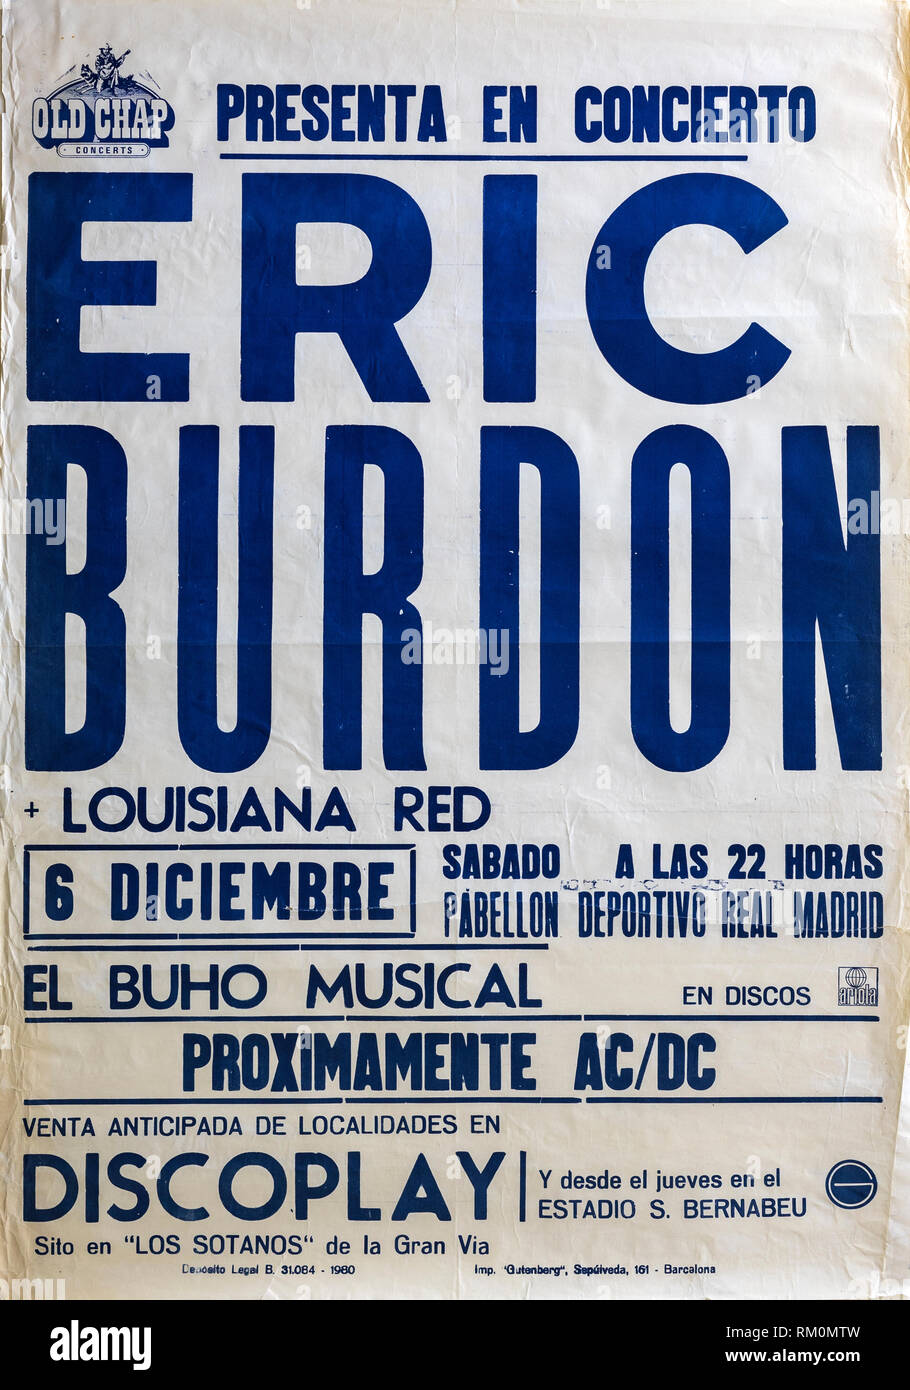 https://c8.alamy.com/comp/RM0MTW/eric-burdon-acdc-tour-madrid-1980-musical-concert-poster-RM0MTW.jpg